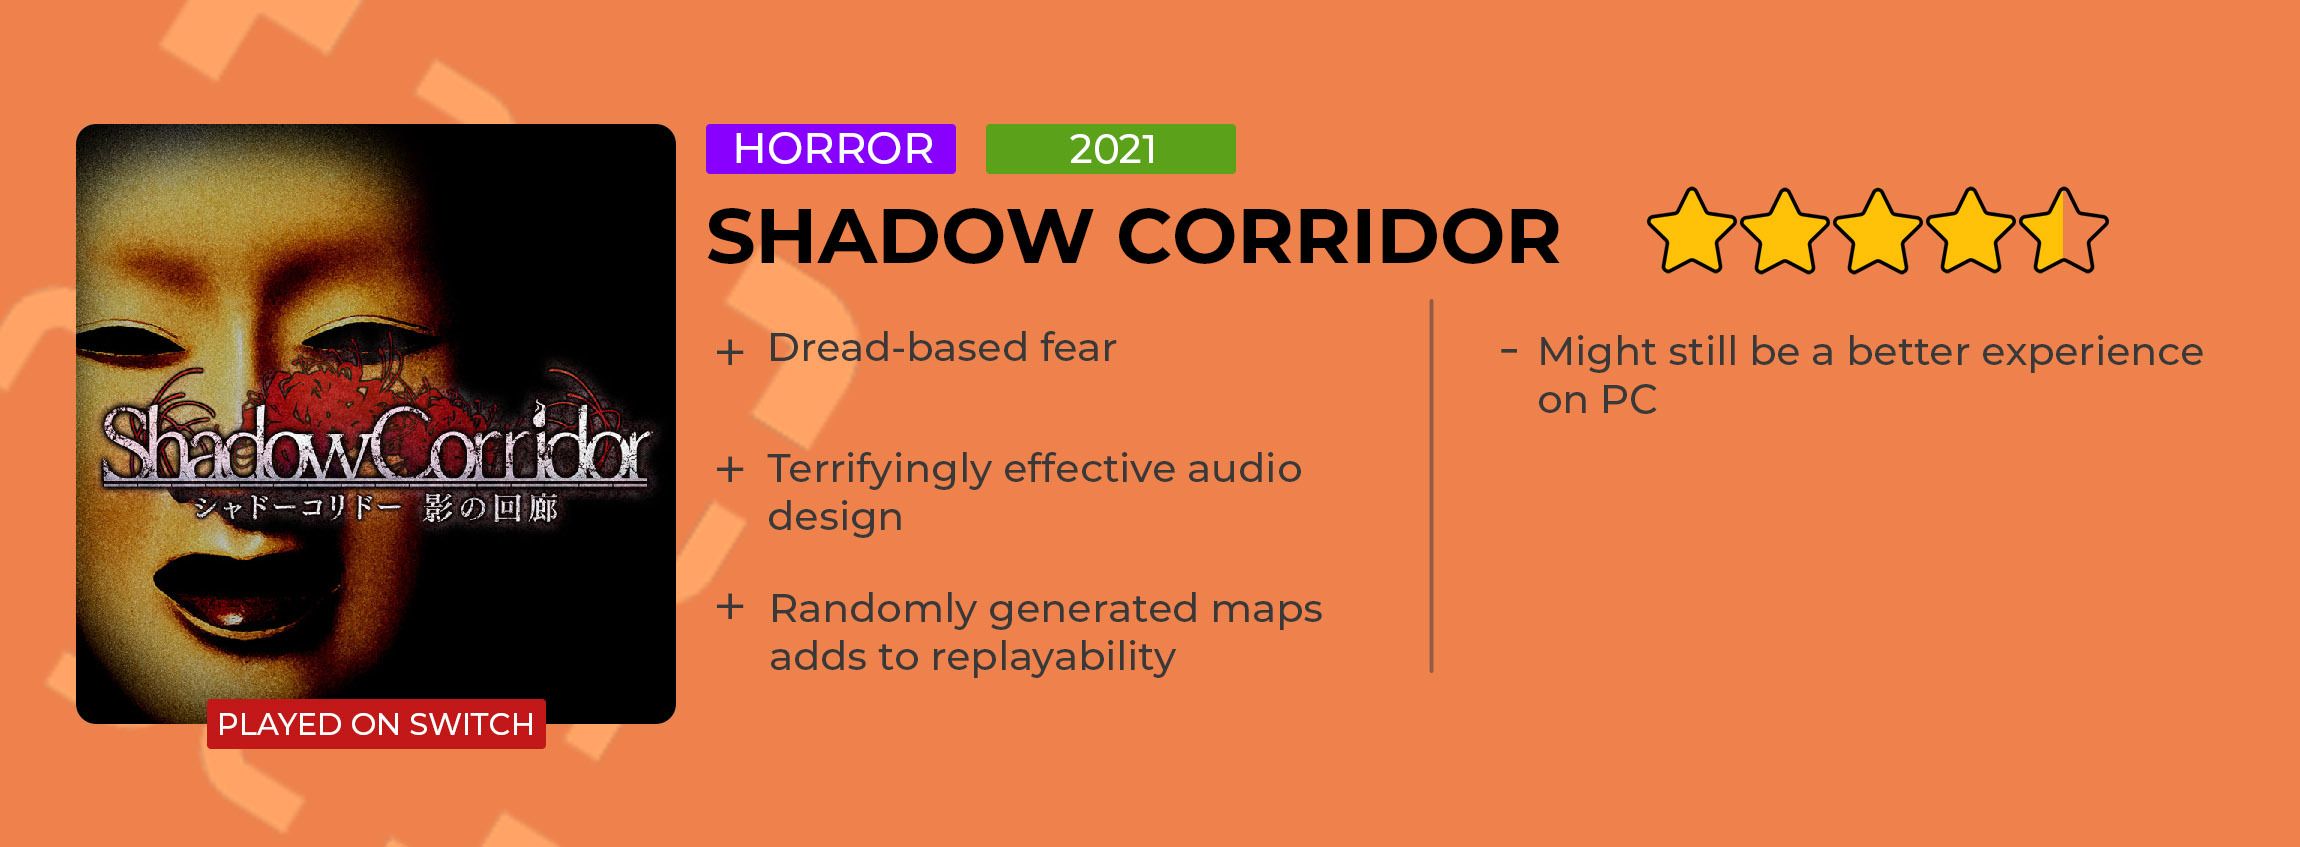 Shadow Corridor Review Card